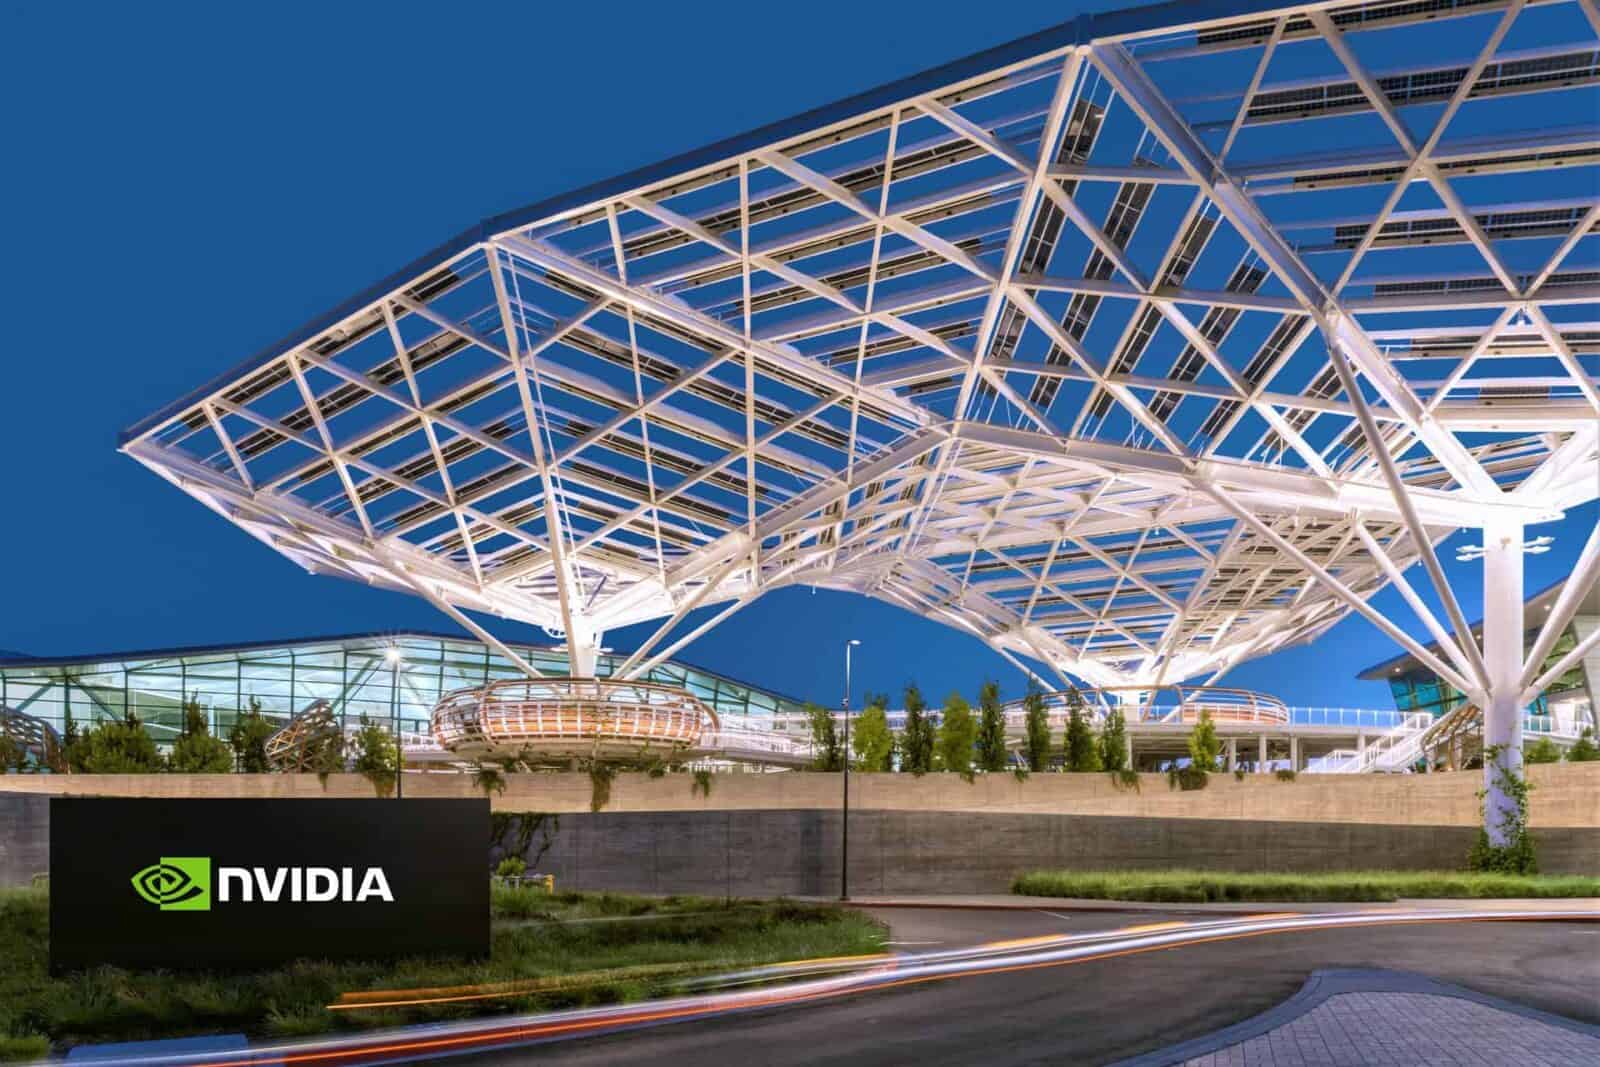 Nvidia Headquarters Santa Clara, dpa afx, vanguard group